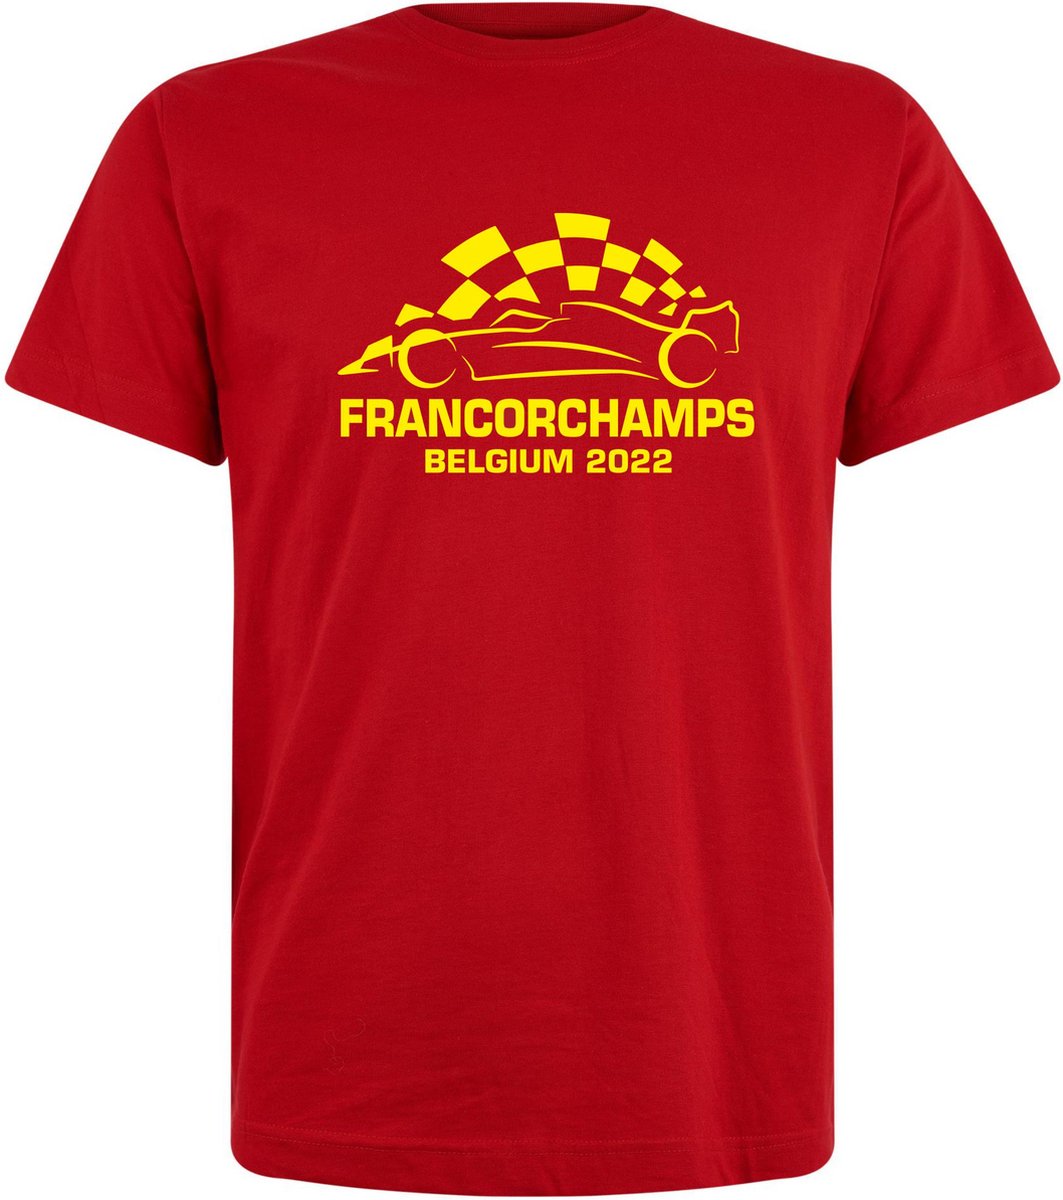 T-shirt kinderen Francorchamps Belgium 2022 met raceauto | Max Verstappen / Red Bull Racing / Formule 1 fan | Grand Prix Circuit Spa-Francorchamps | kleding shirt | Rood | maat 116